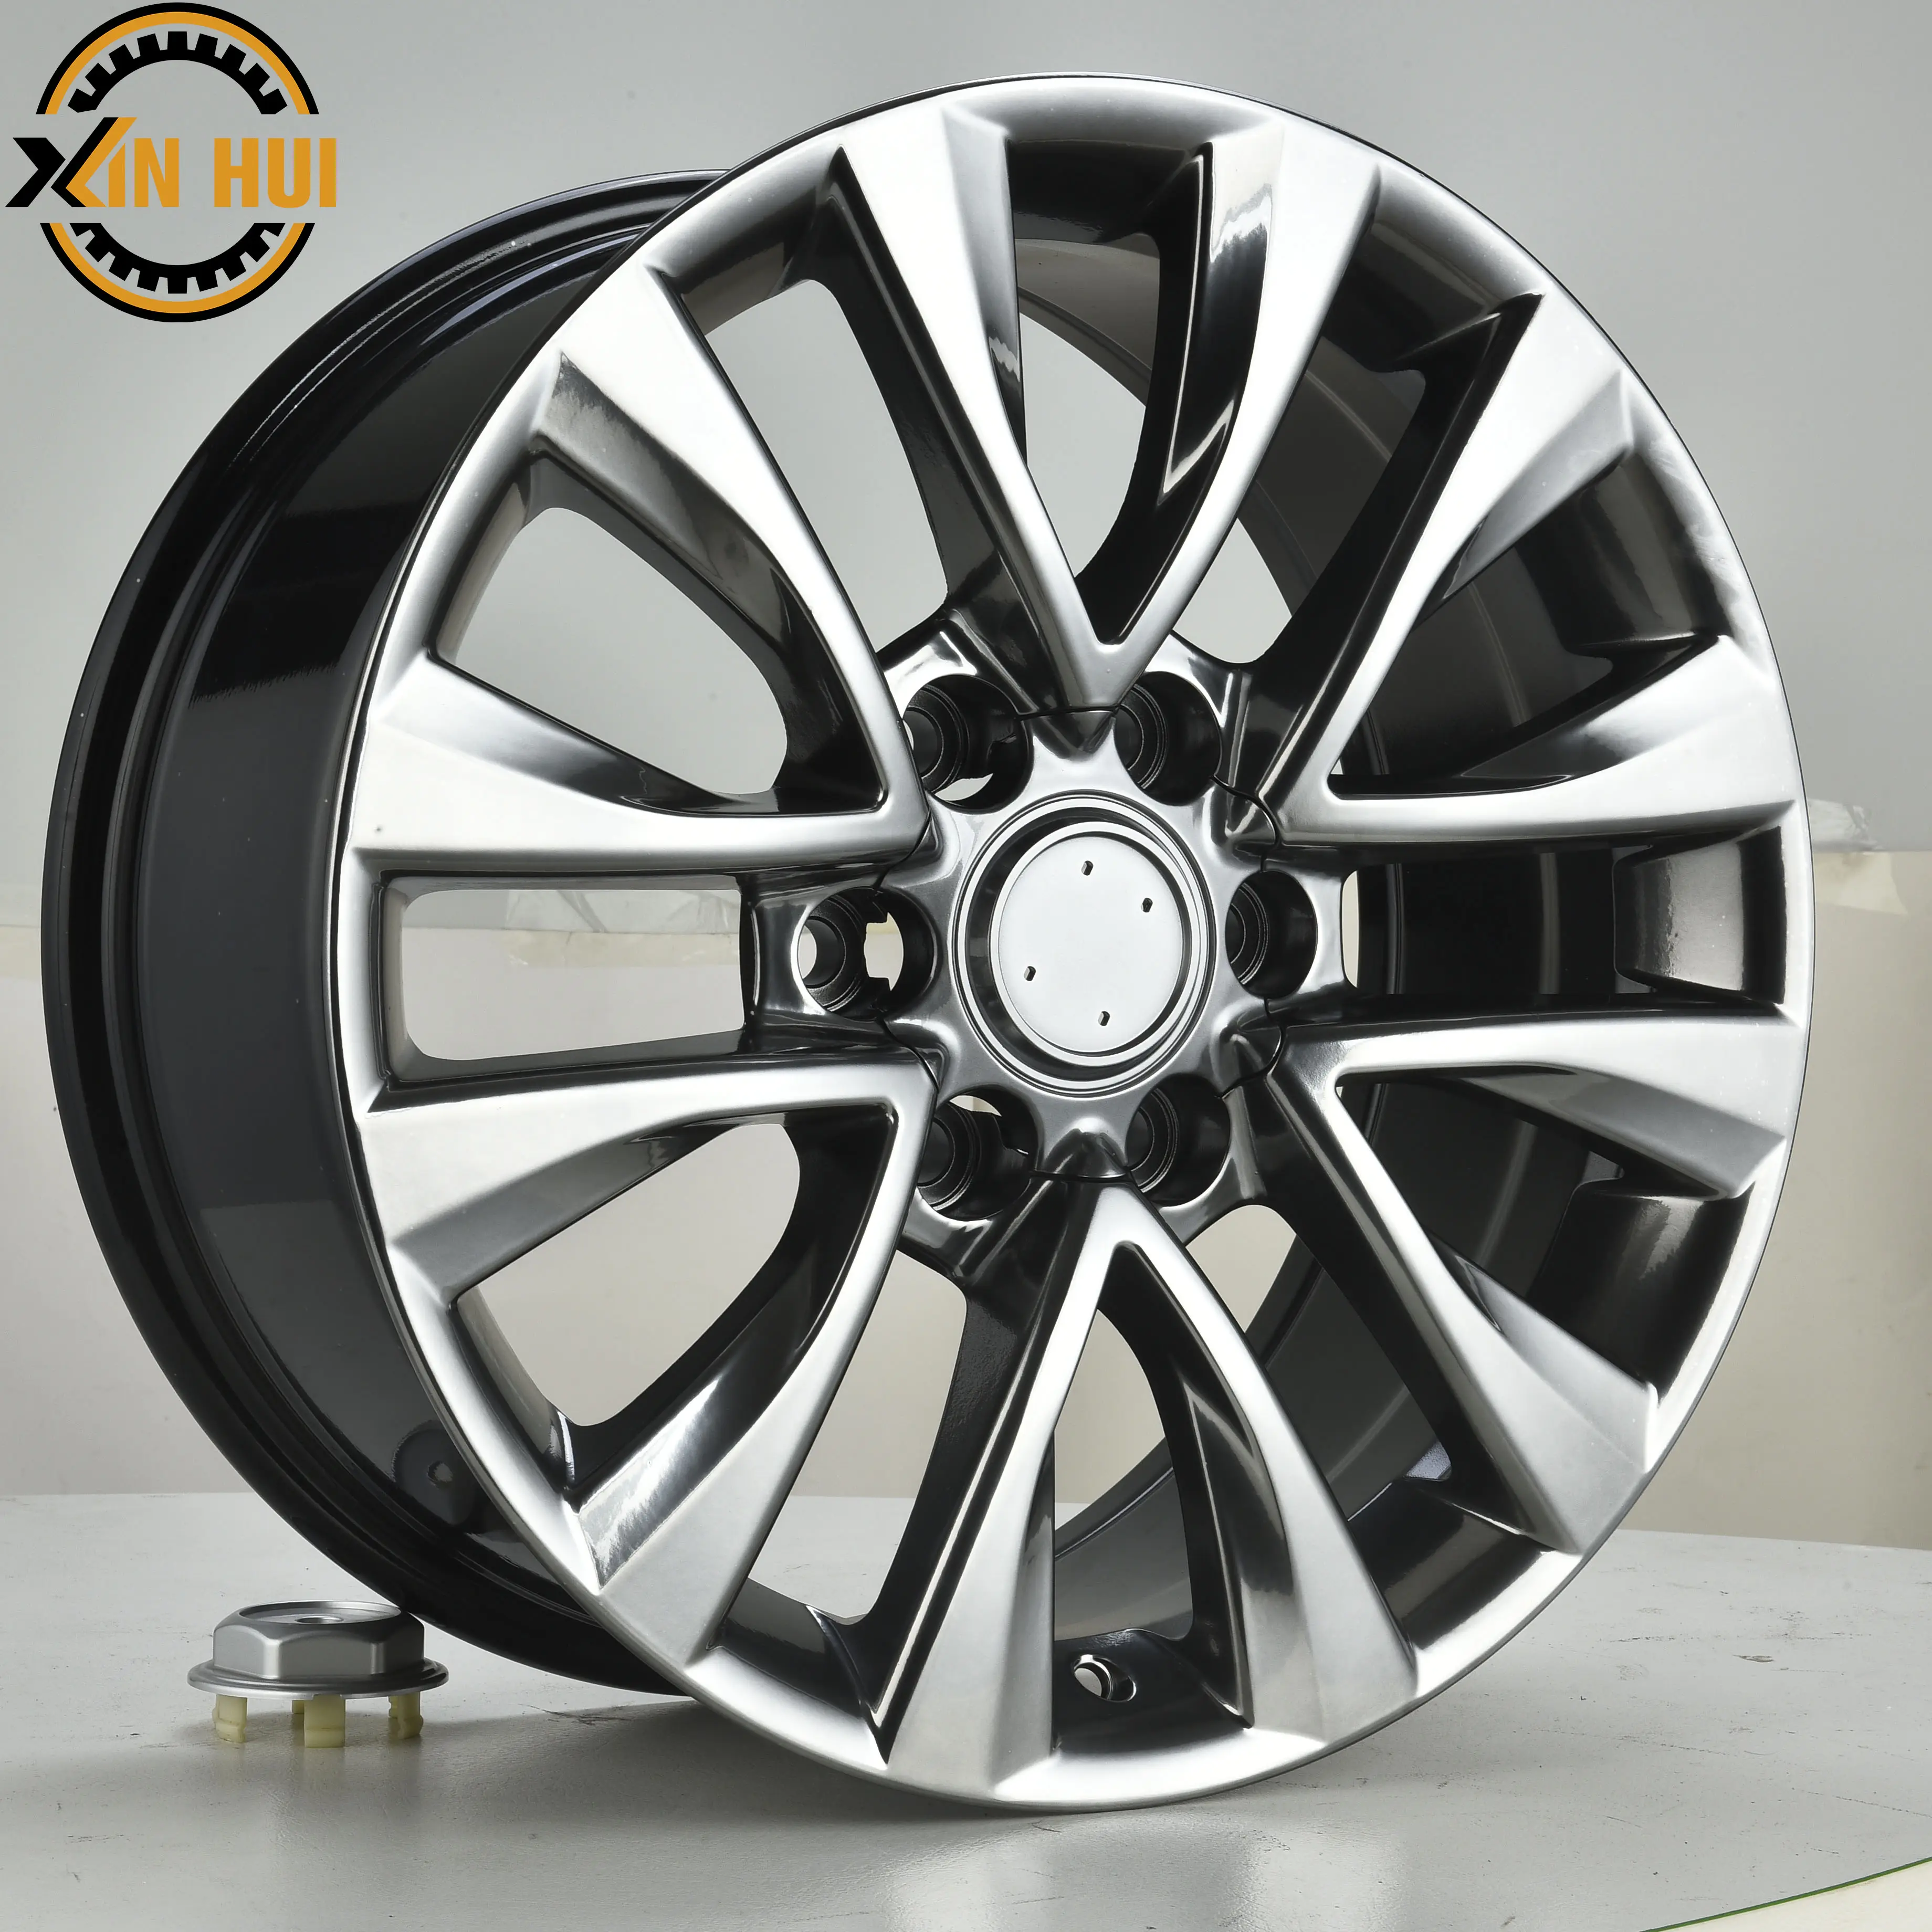 18 inch 20 inch new car rim alloy wheels 6X139.7 fit for Japanese car Lexus auto parts